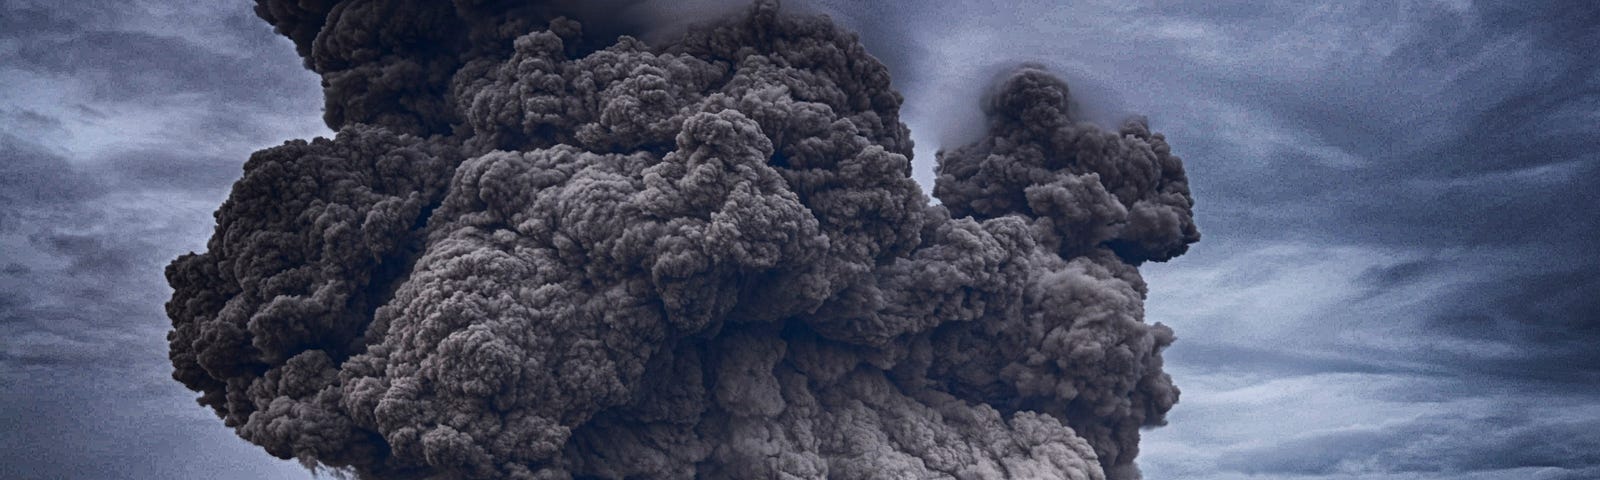 Volcano spews ash under darkened sky.